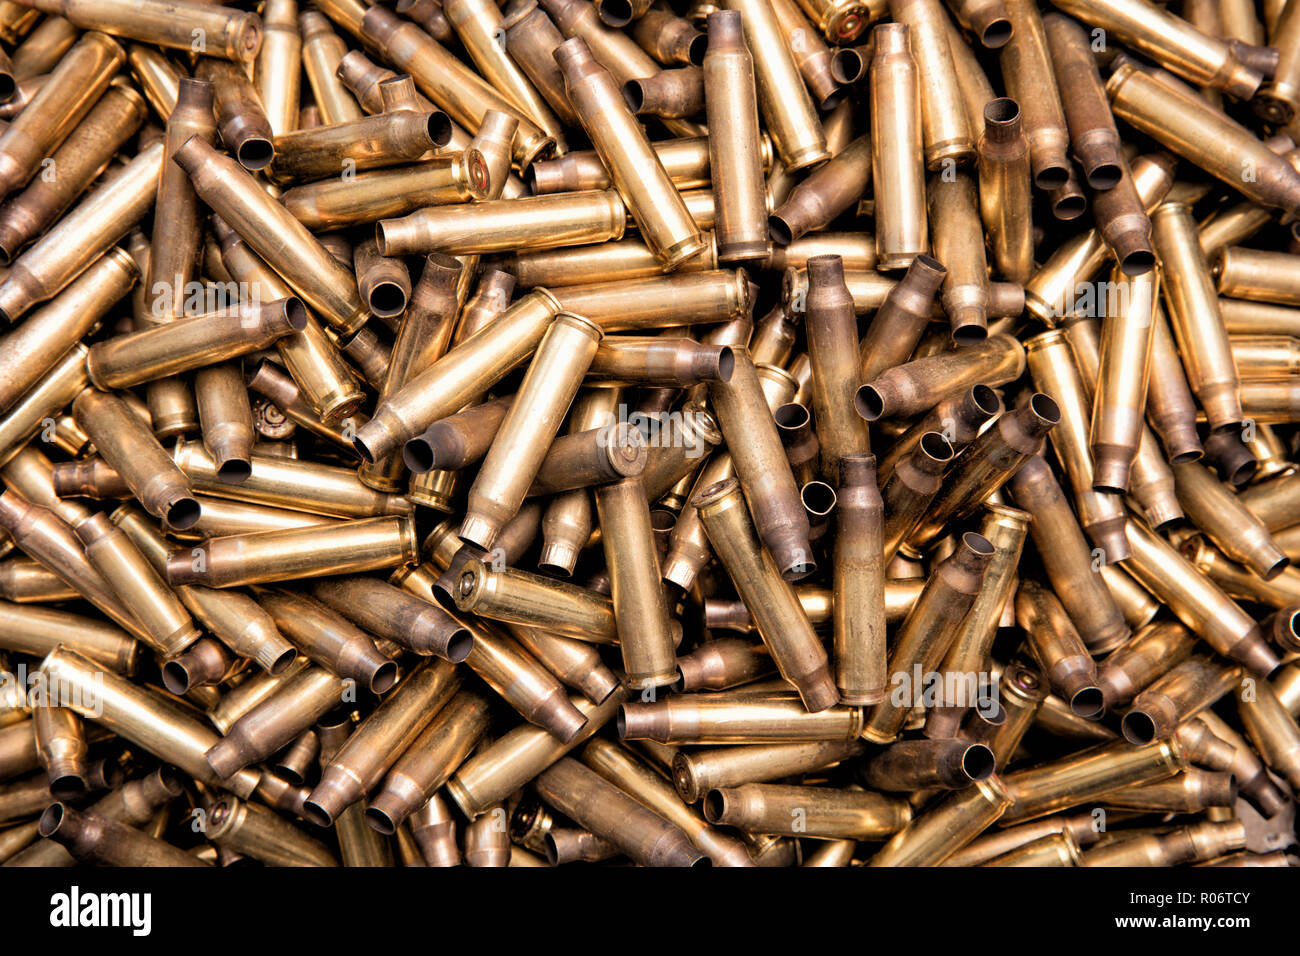 Spent brass ammunition cases Stock Photo